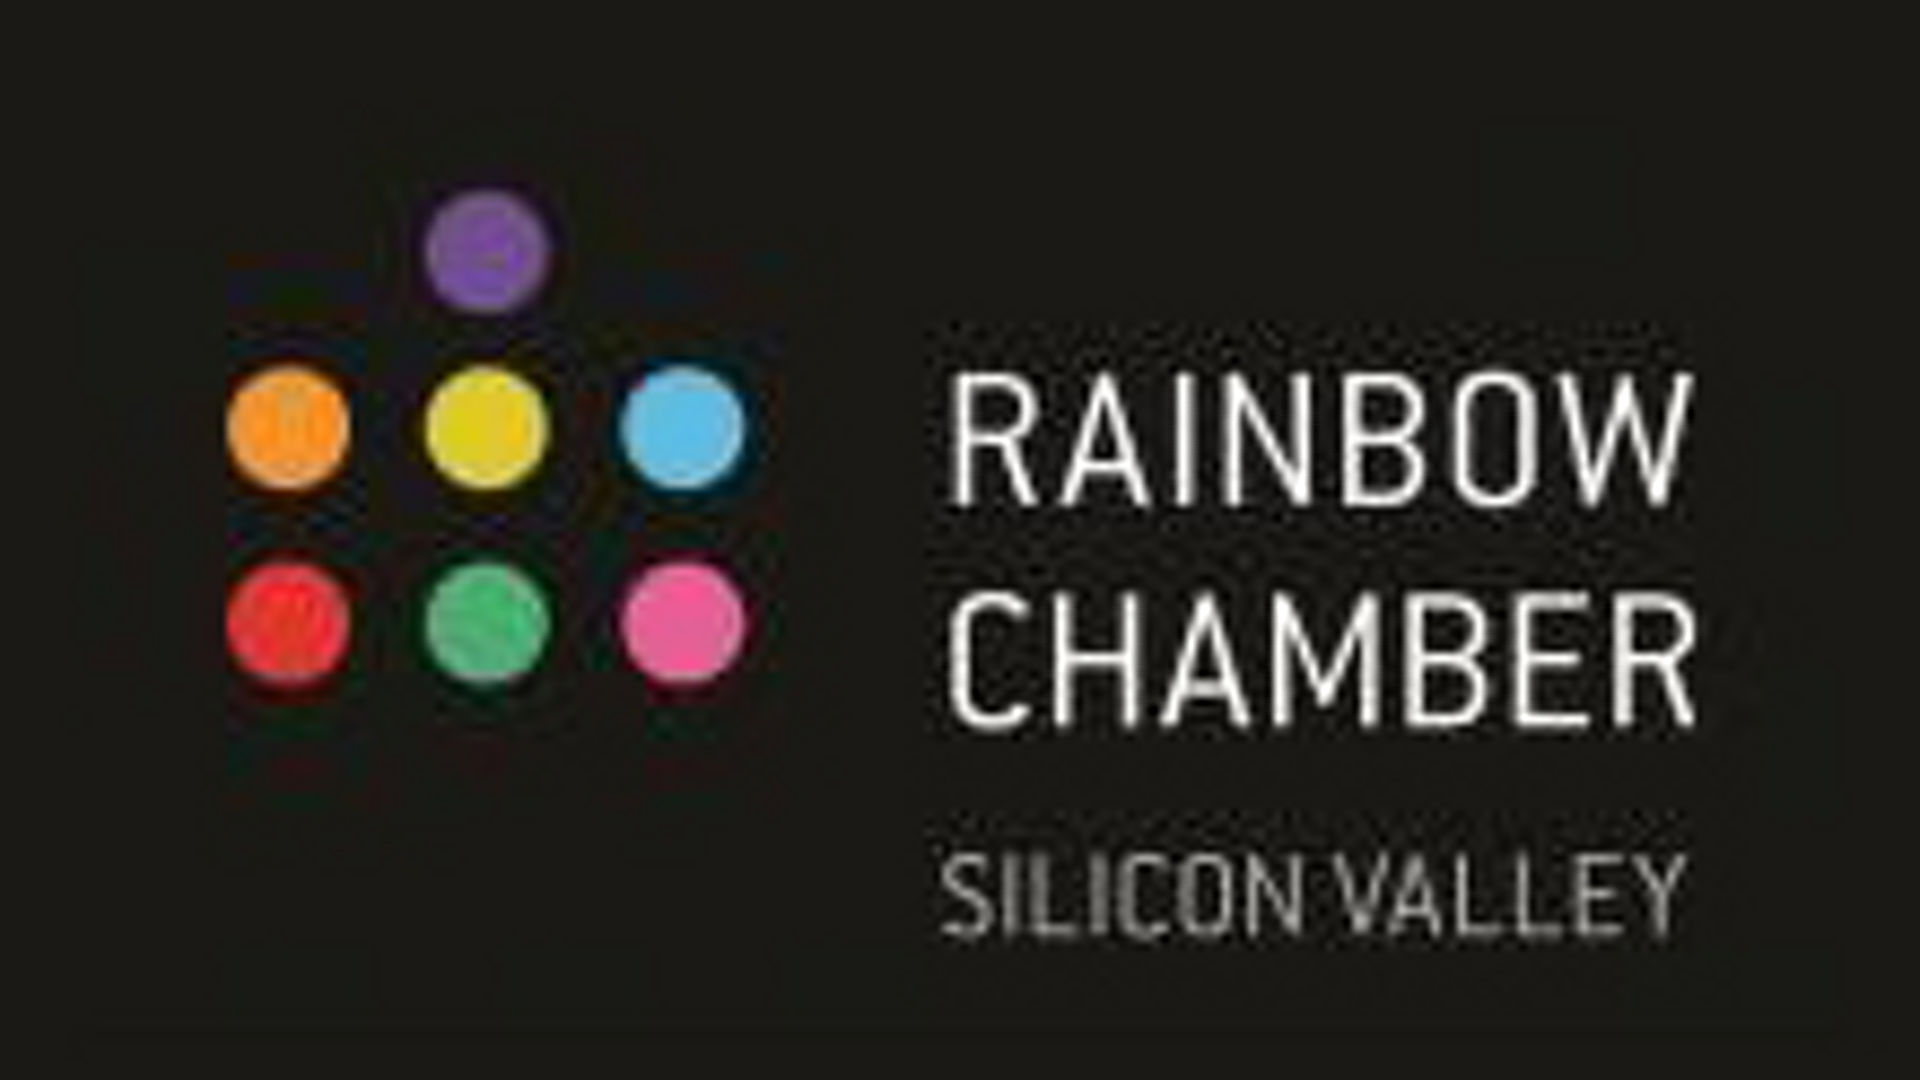 Rainbow Chamber Silicon Valley organization logo